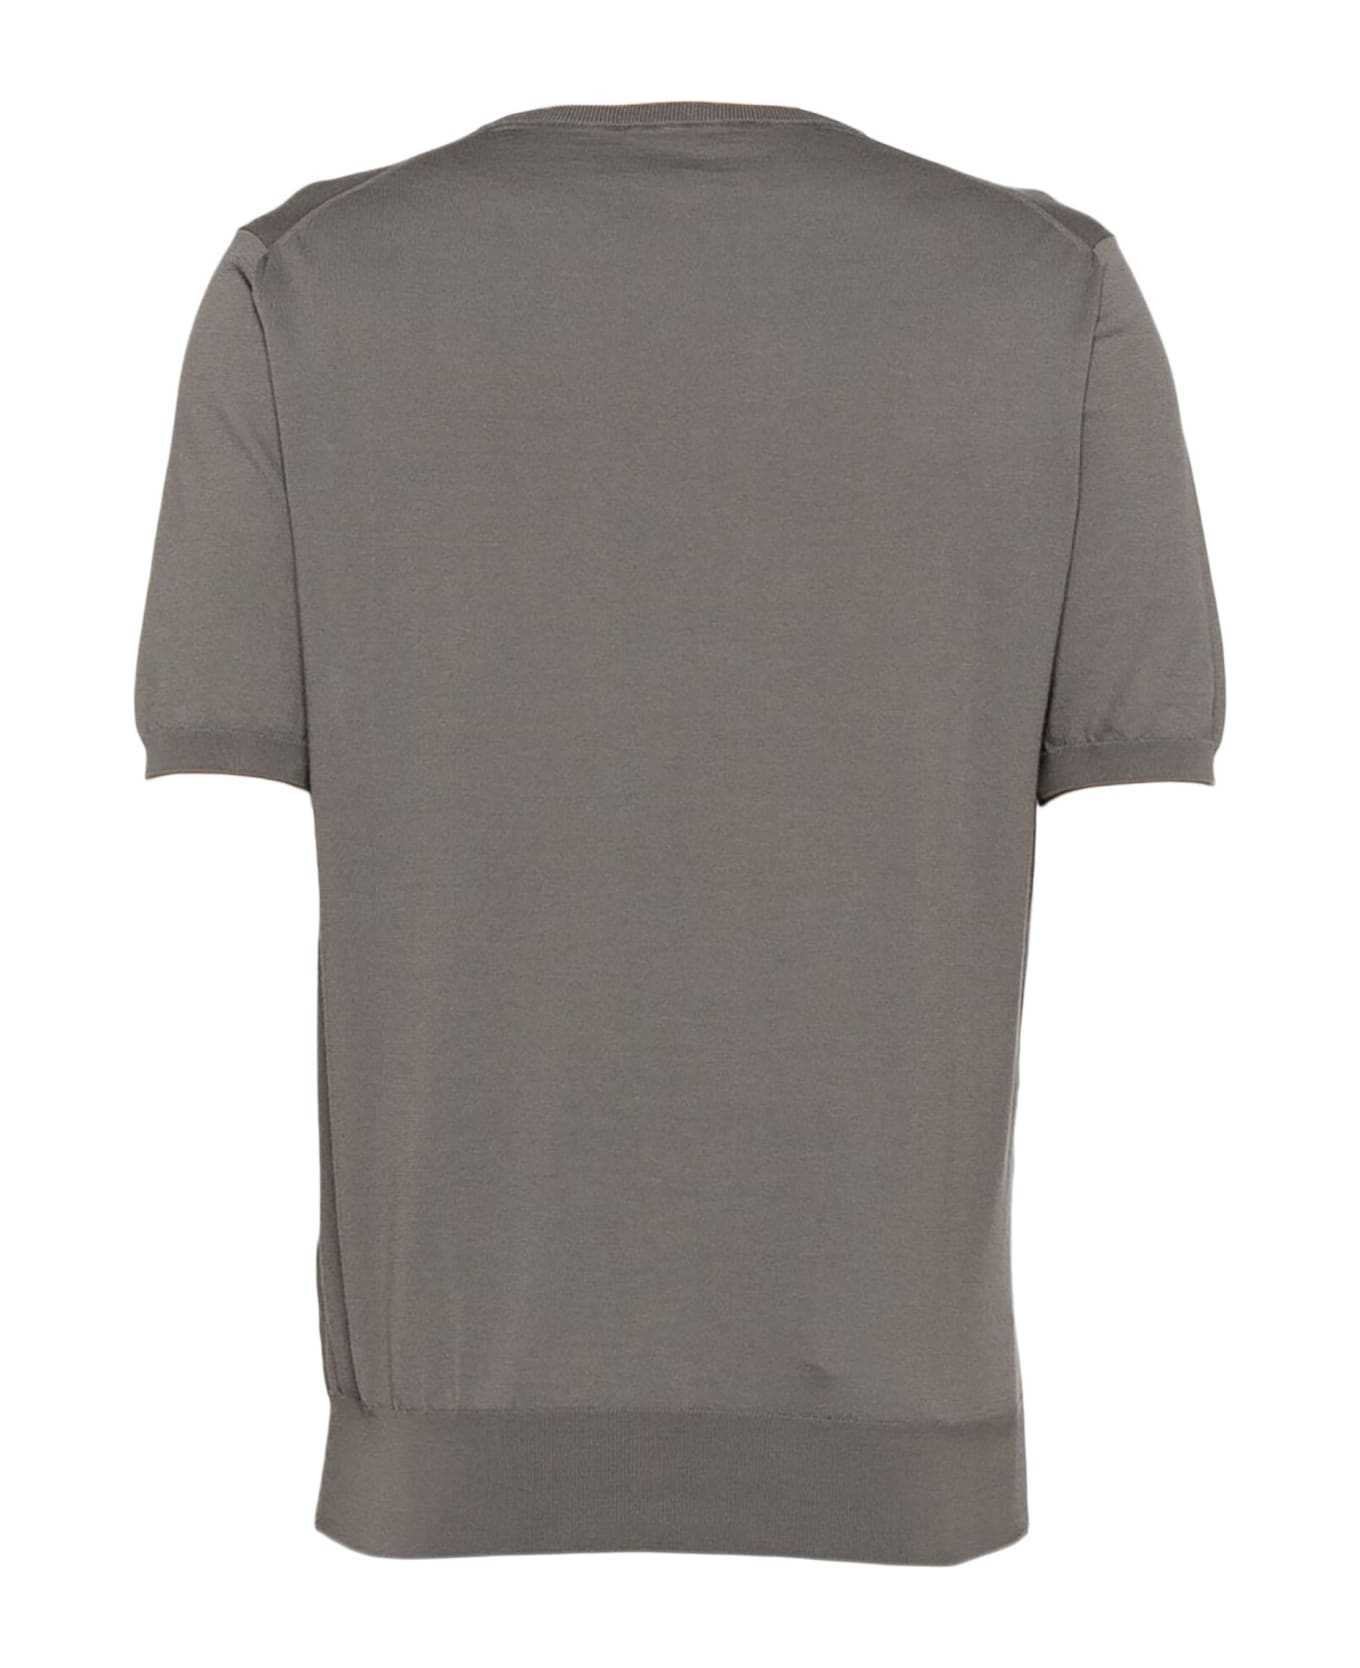 Cruciani Grey Cotton T-shirt - Grey